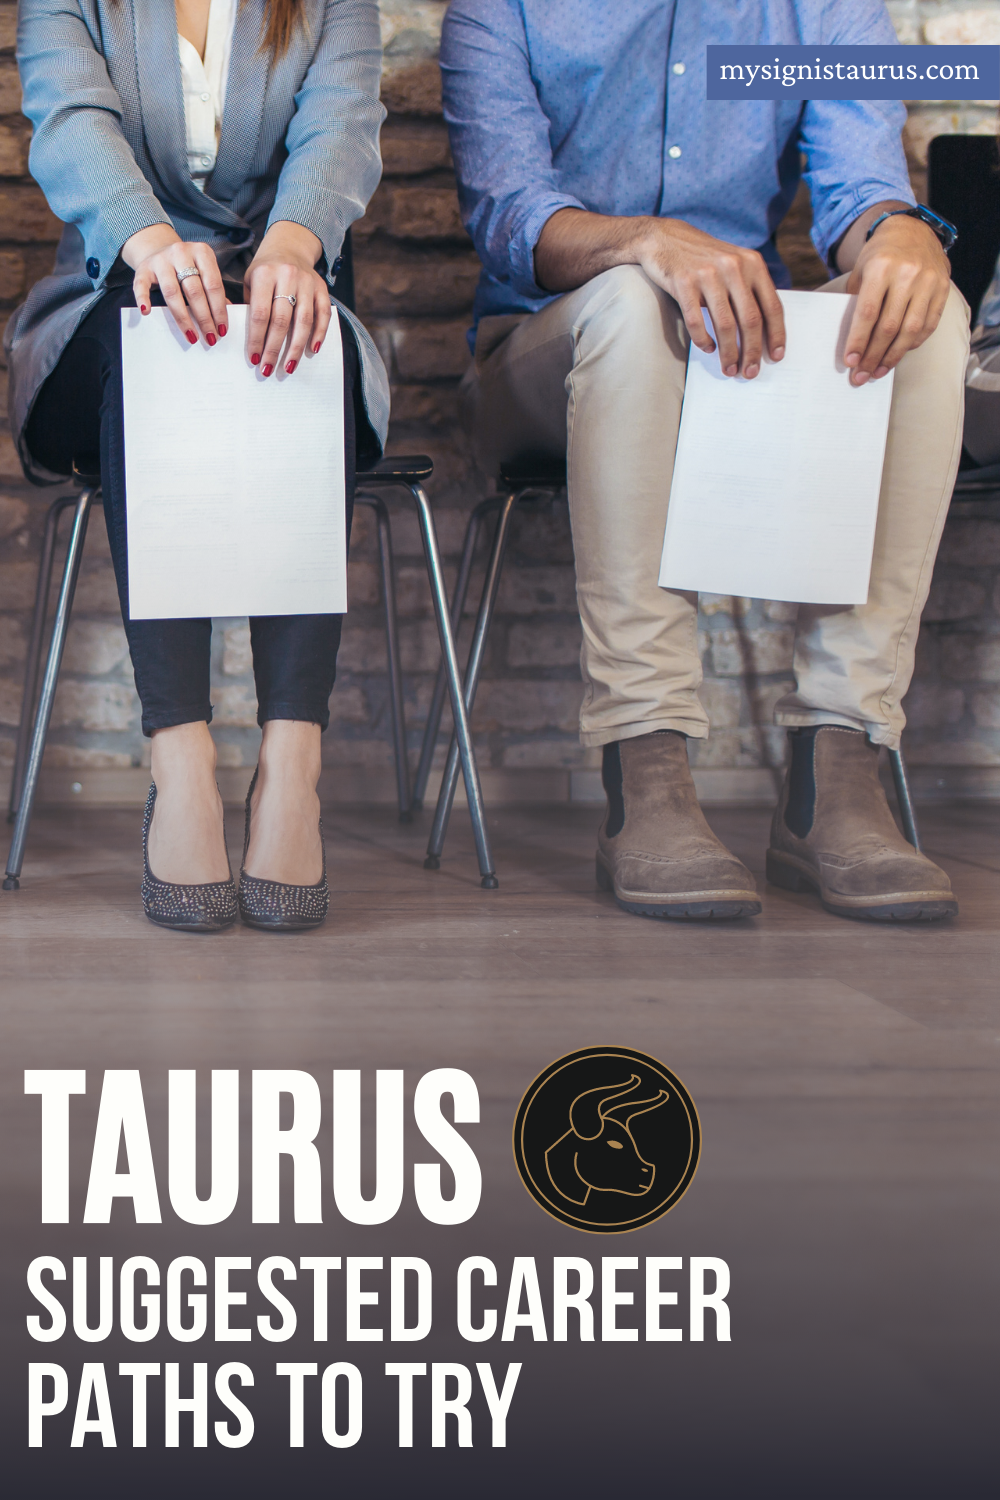 Taurus Career Path Suggestions_ Jobs For Taurus Signs #taurus #taurussign #zodiac #astrology